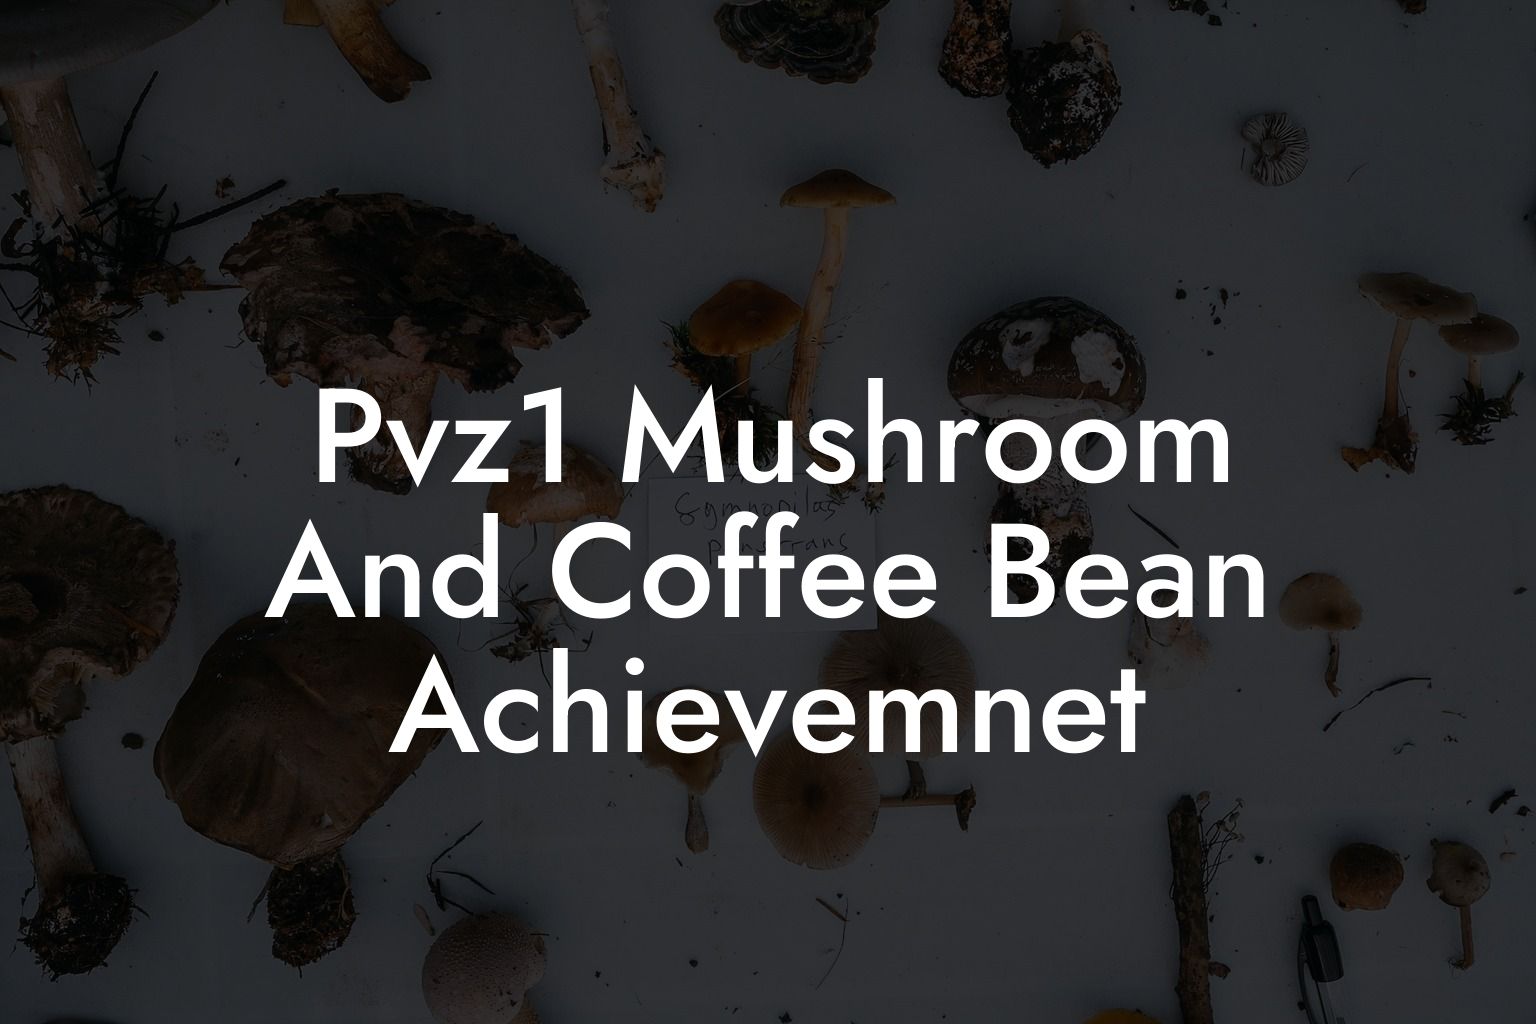 Pvz1 Mushroom And Coffee Bean Achievemnet